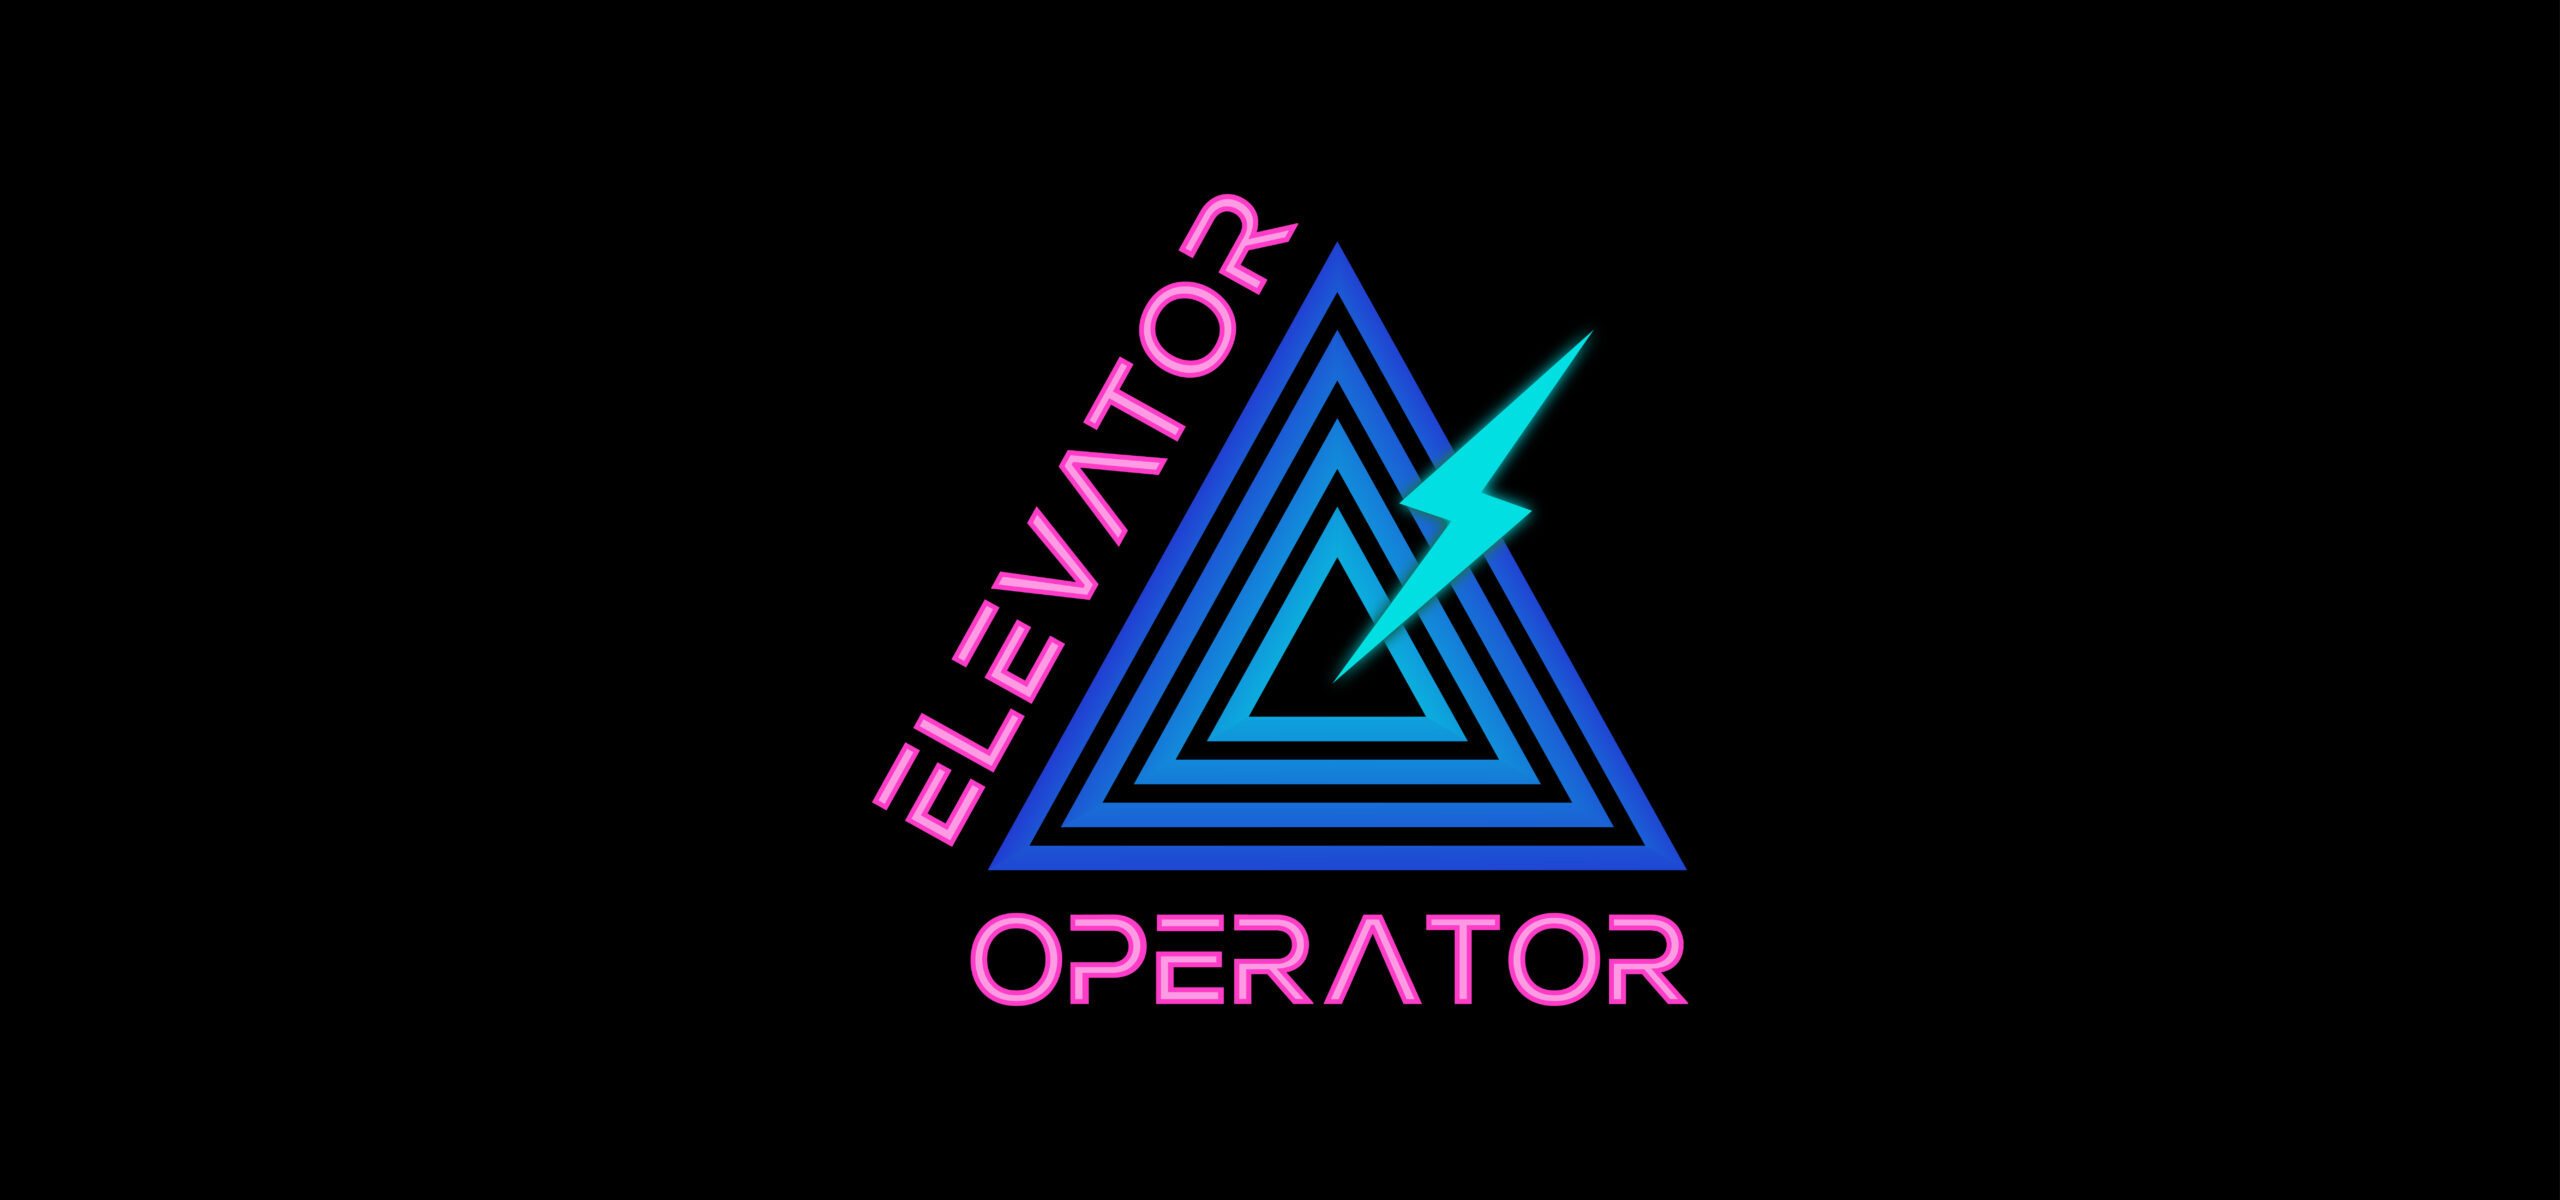 Elevator Operator, Indie rock band from Olympia, WA